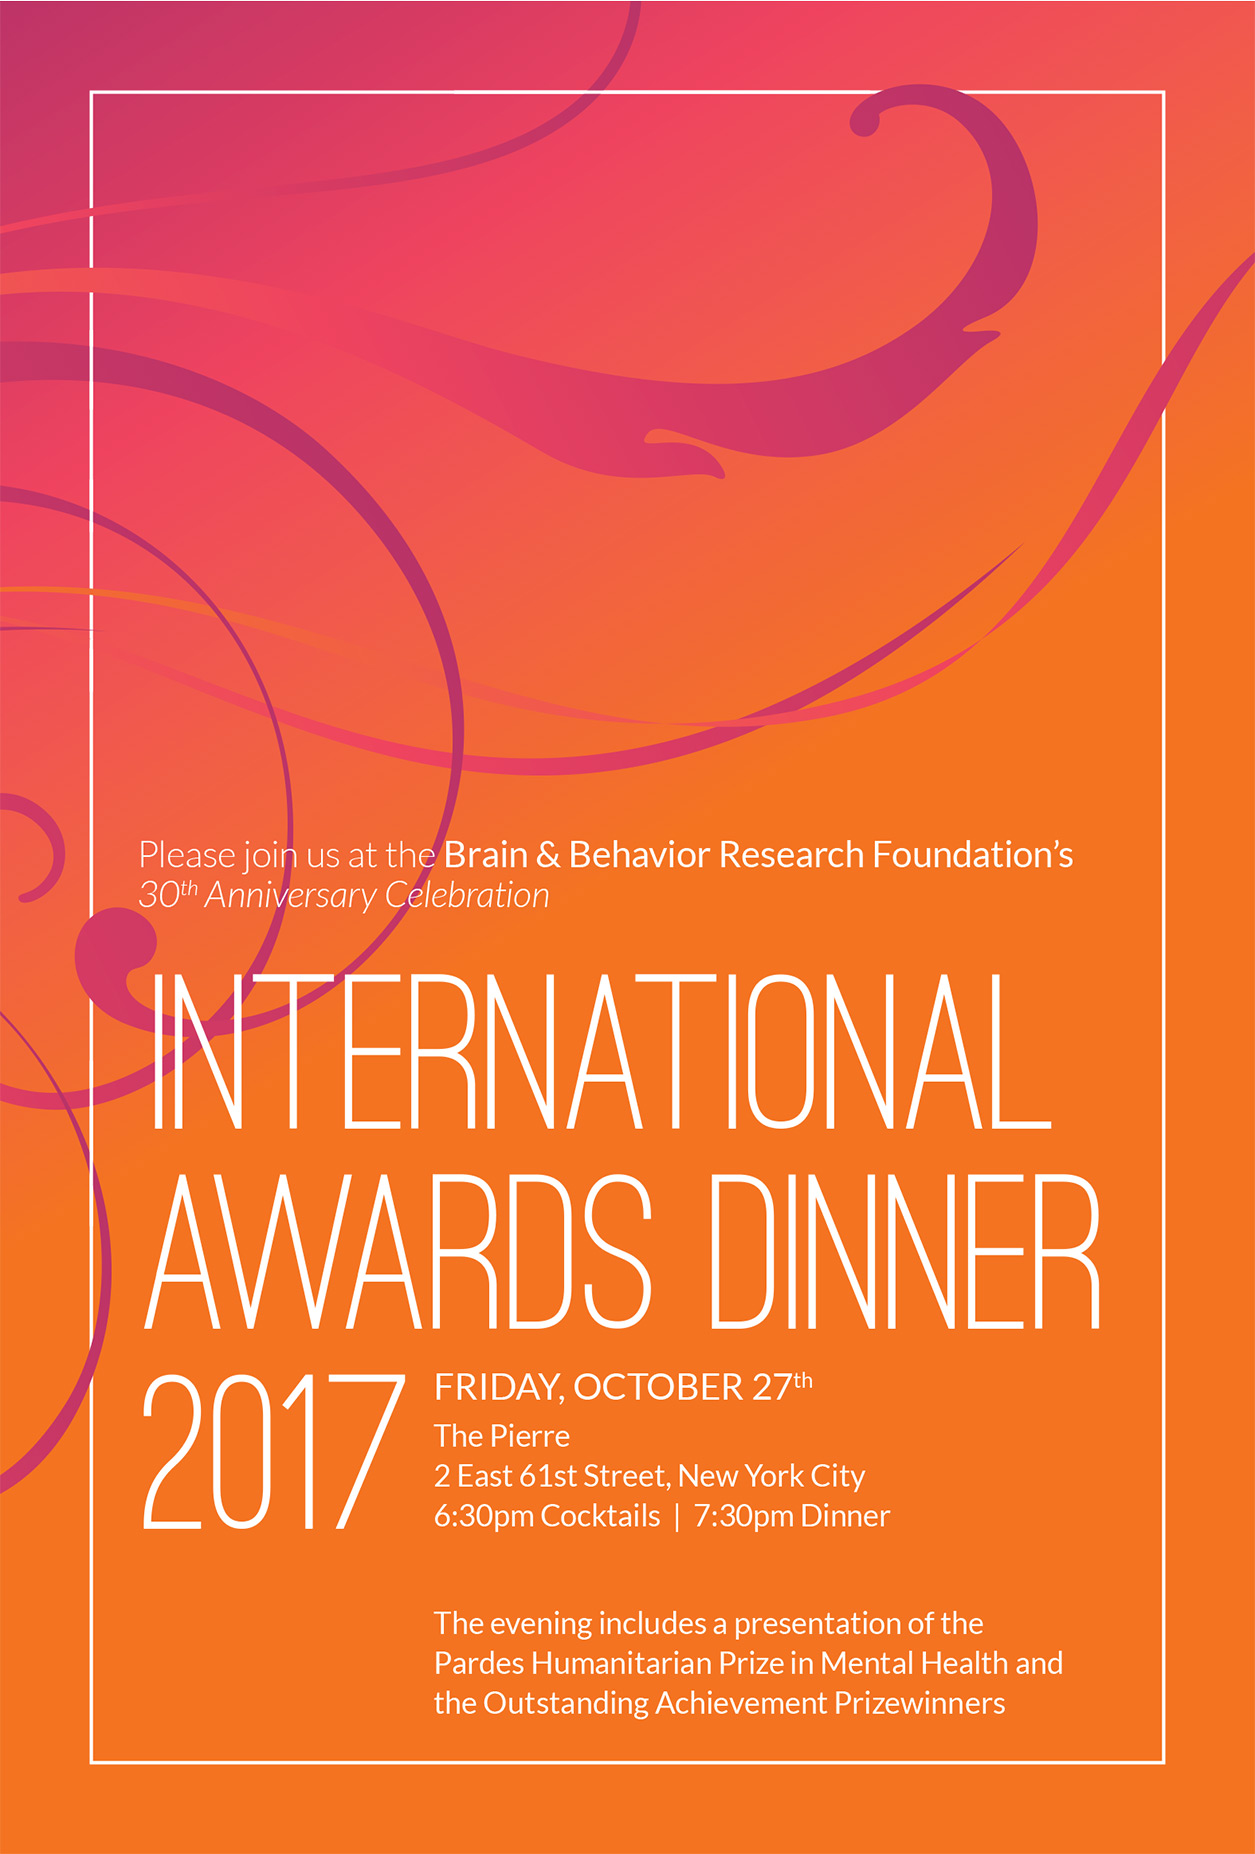 International Awards Dinner 2017
